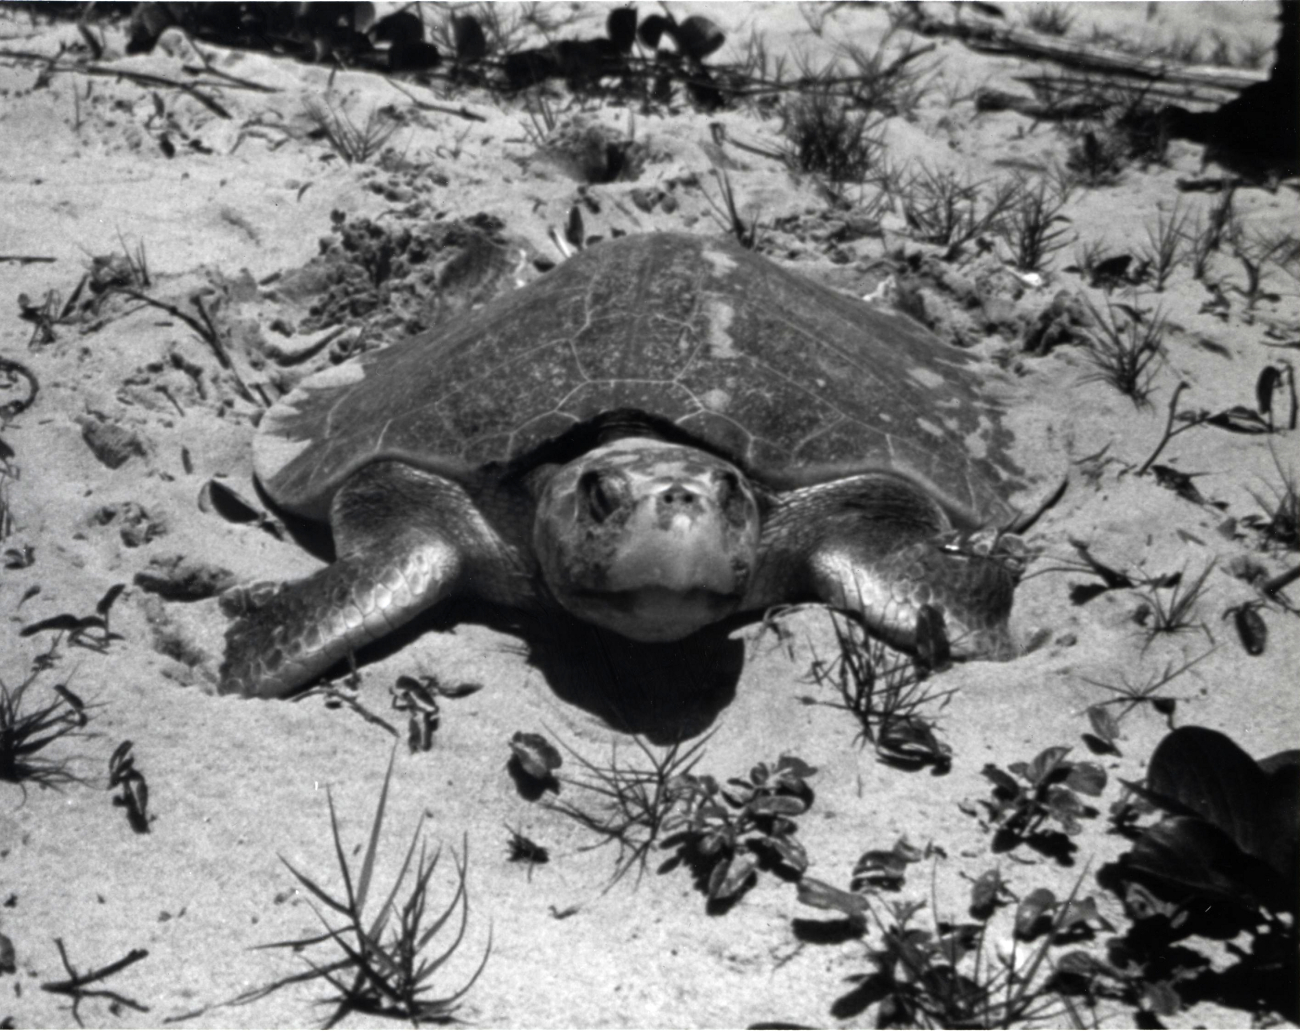 Nesting Ridley turtle